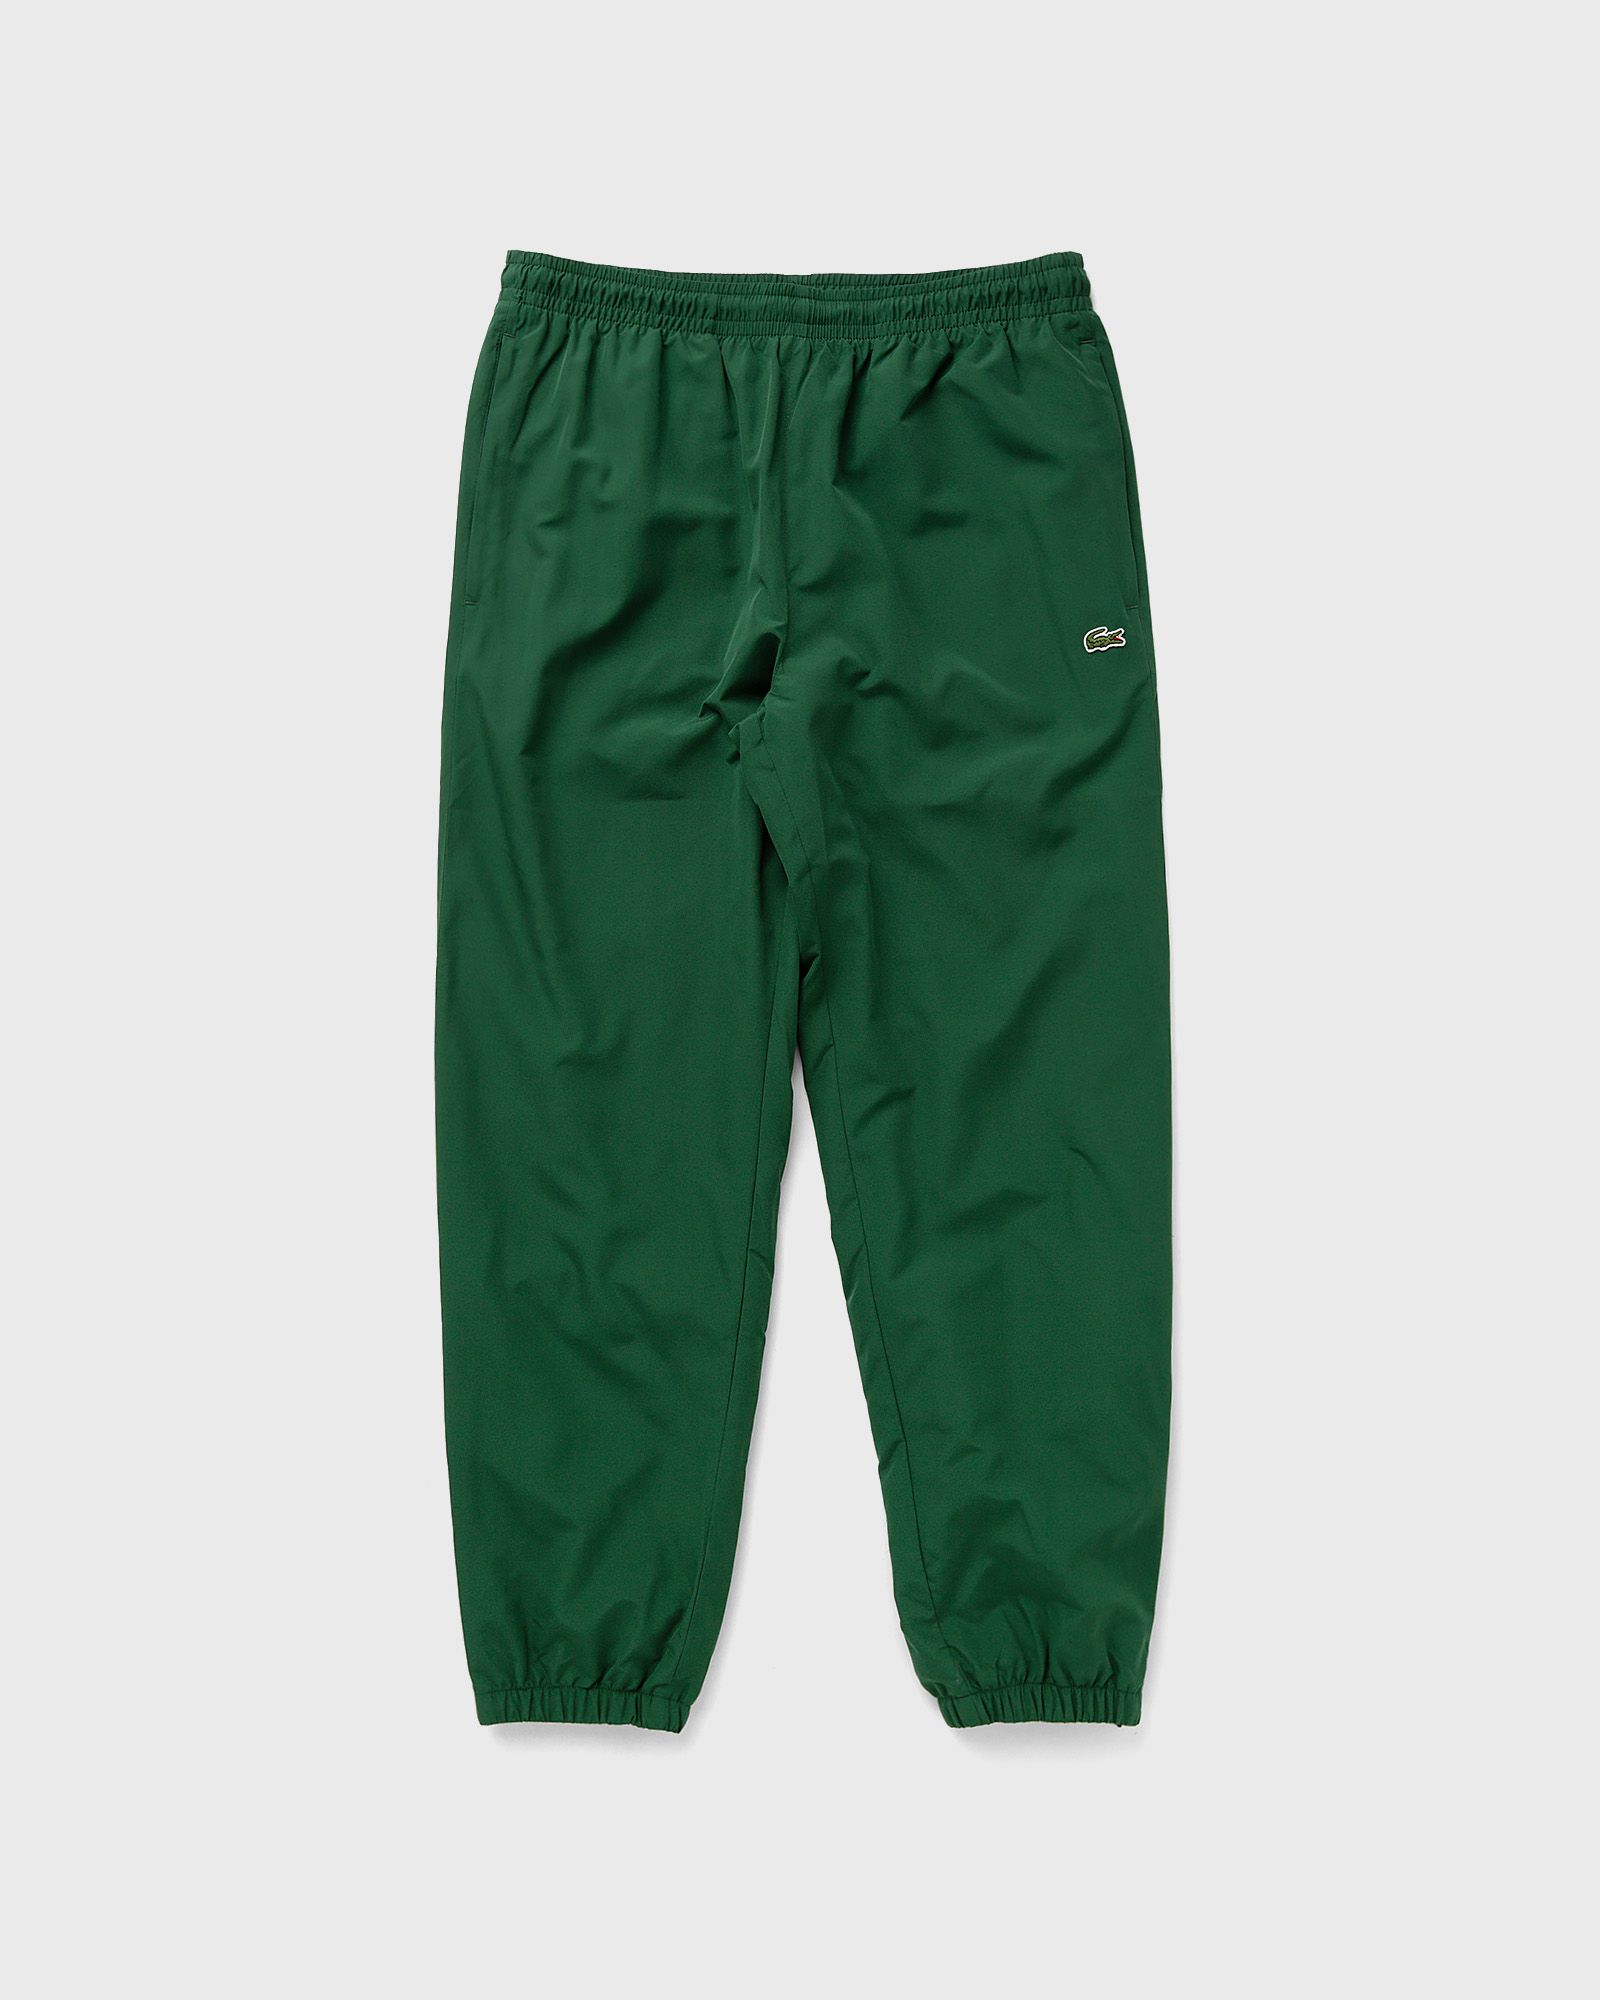 Lacoste TRAININGSHOSE men Track Pants green in Größe:M von Lacoste